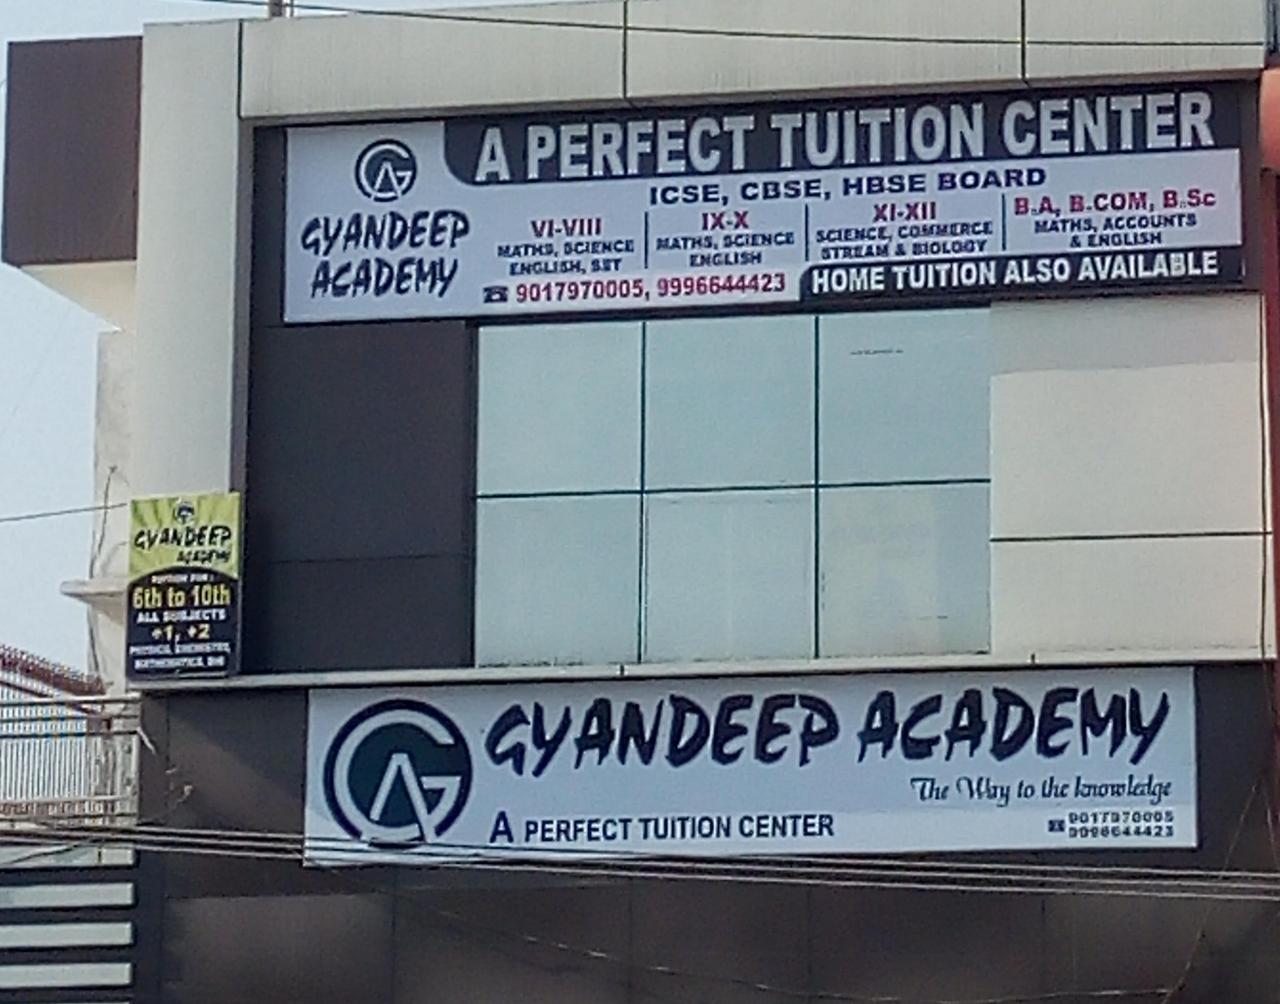 Gyandeep Academy